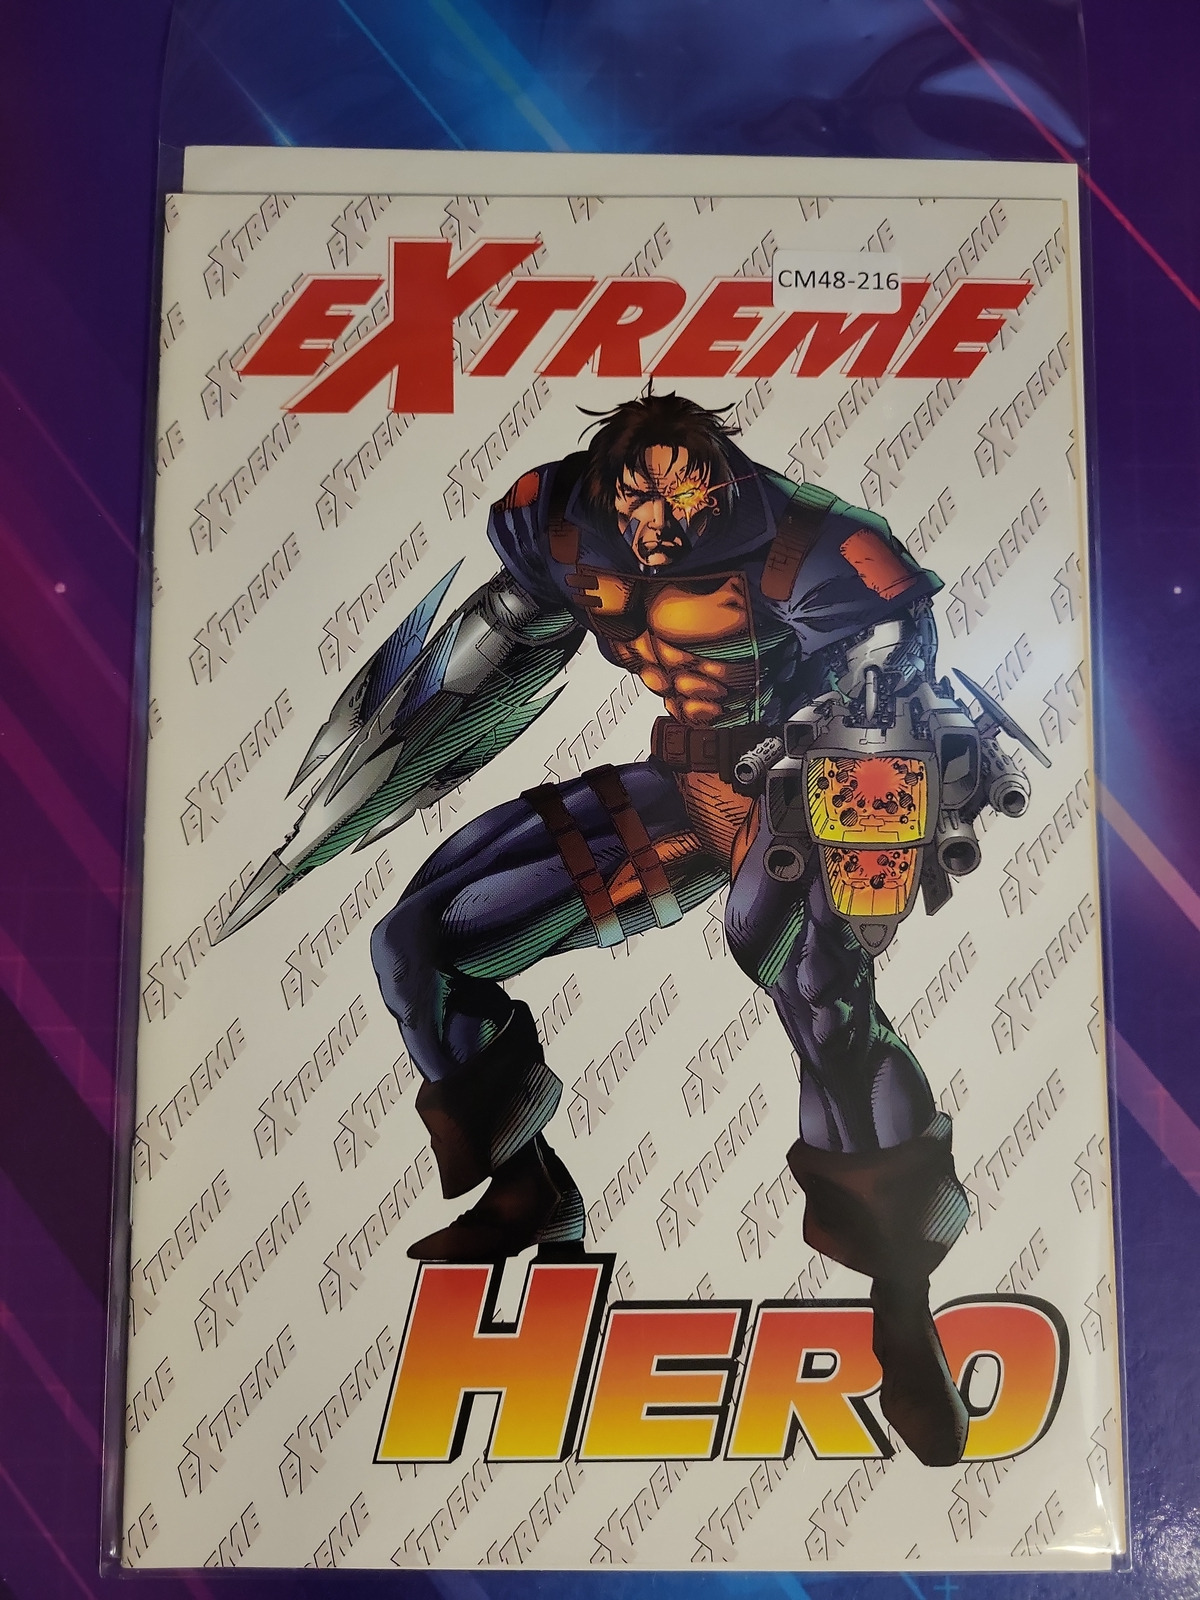 EXTREME HERO #1 ONE-SHOT HIGH GRADE IMAGE COMIC BOOK CM48-216